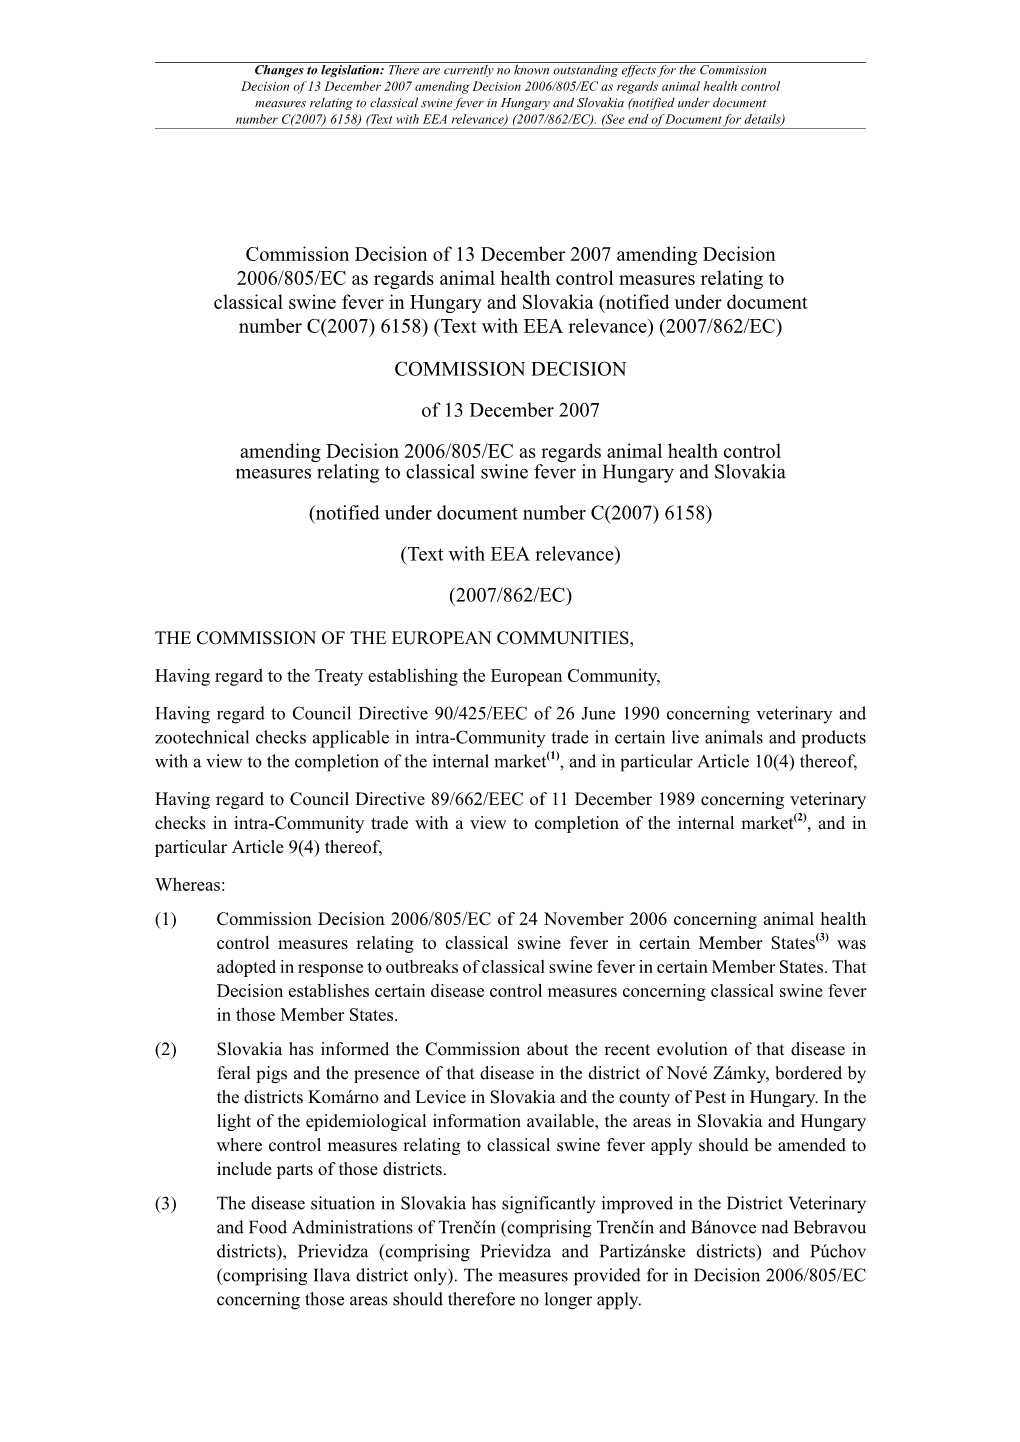 Commission Decision of 13 December 2007 Amending Decision 2006